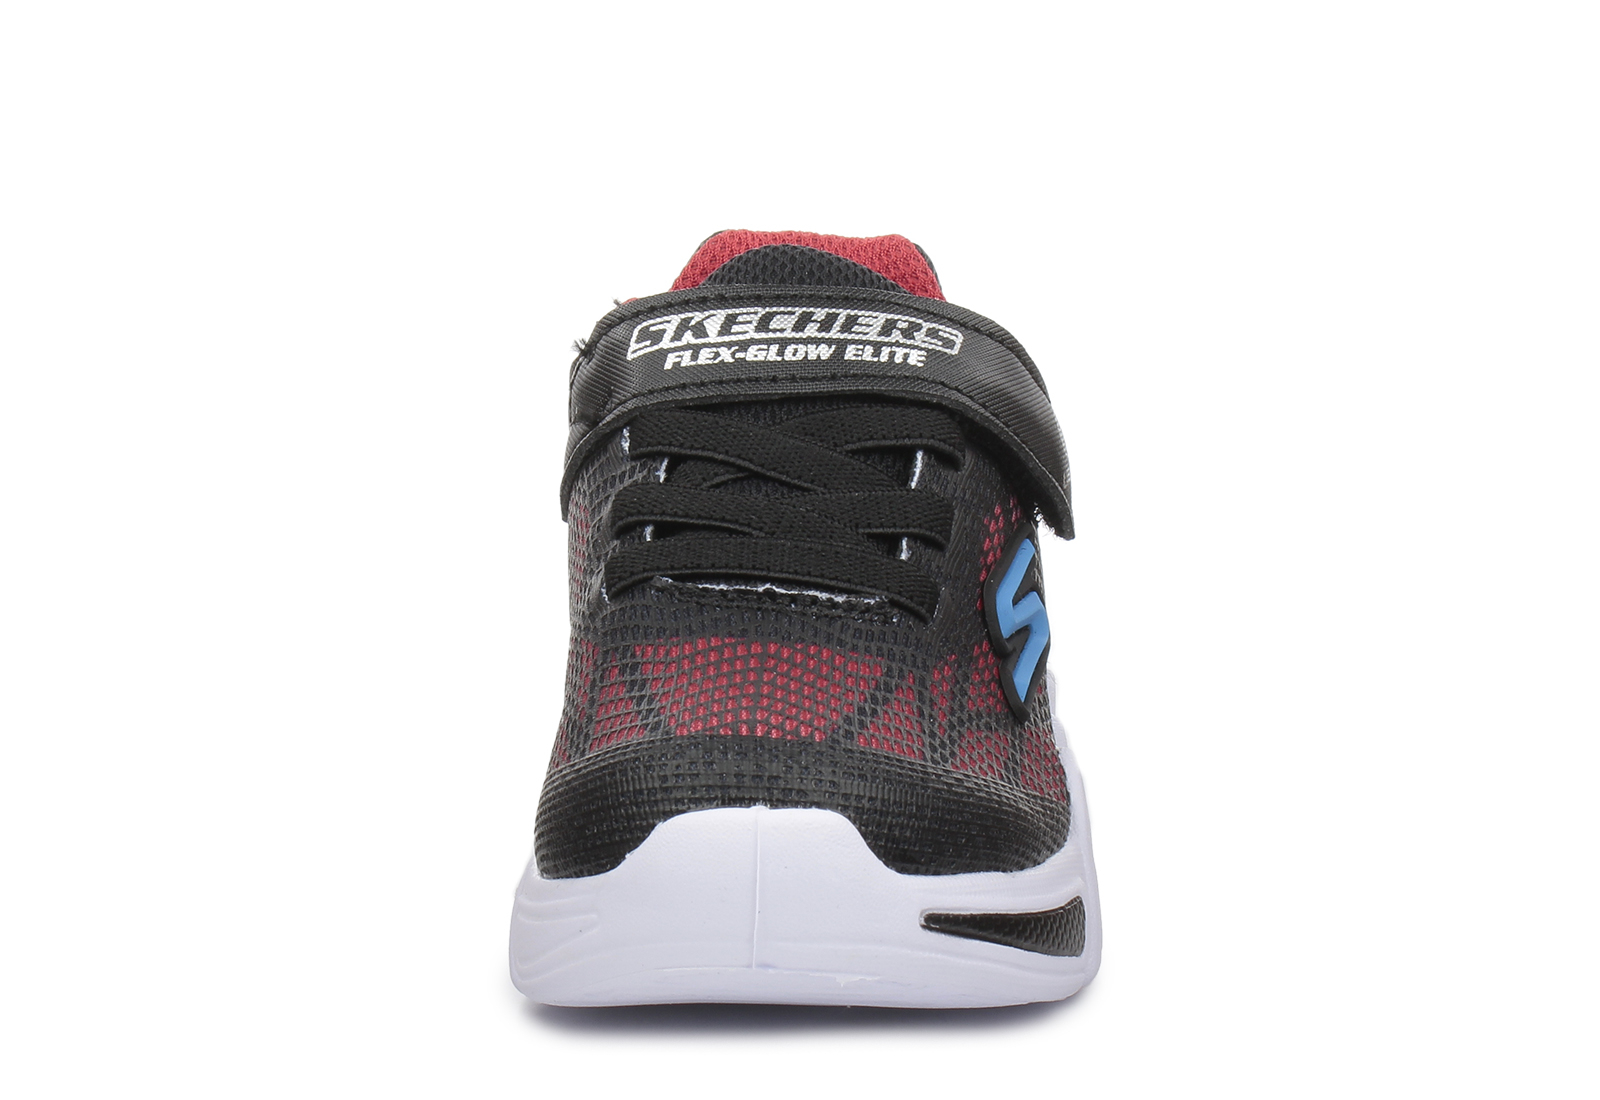 Skechers Sneakers - Flex-glow Elite-vorlo - 400137N-BKRB - Online shop for  sneakers, shoes and boots